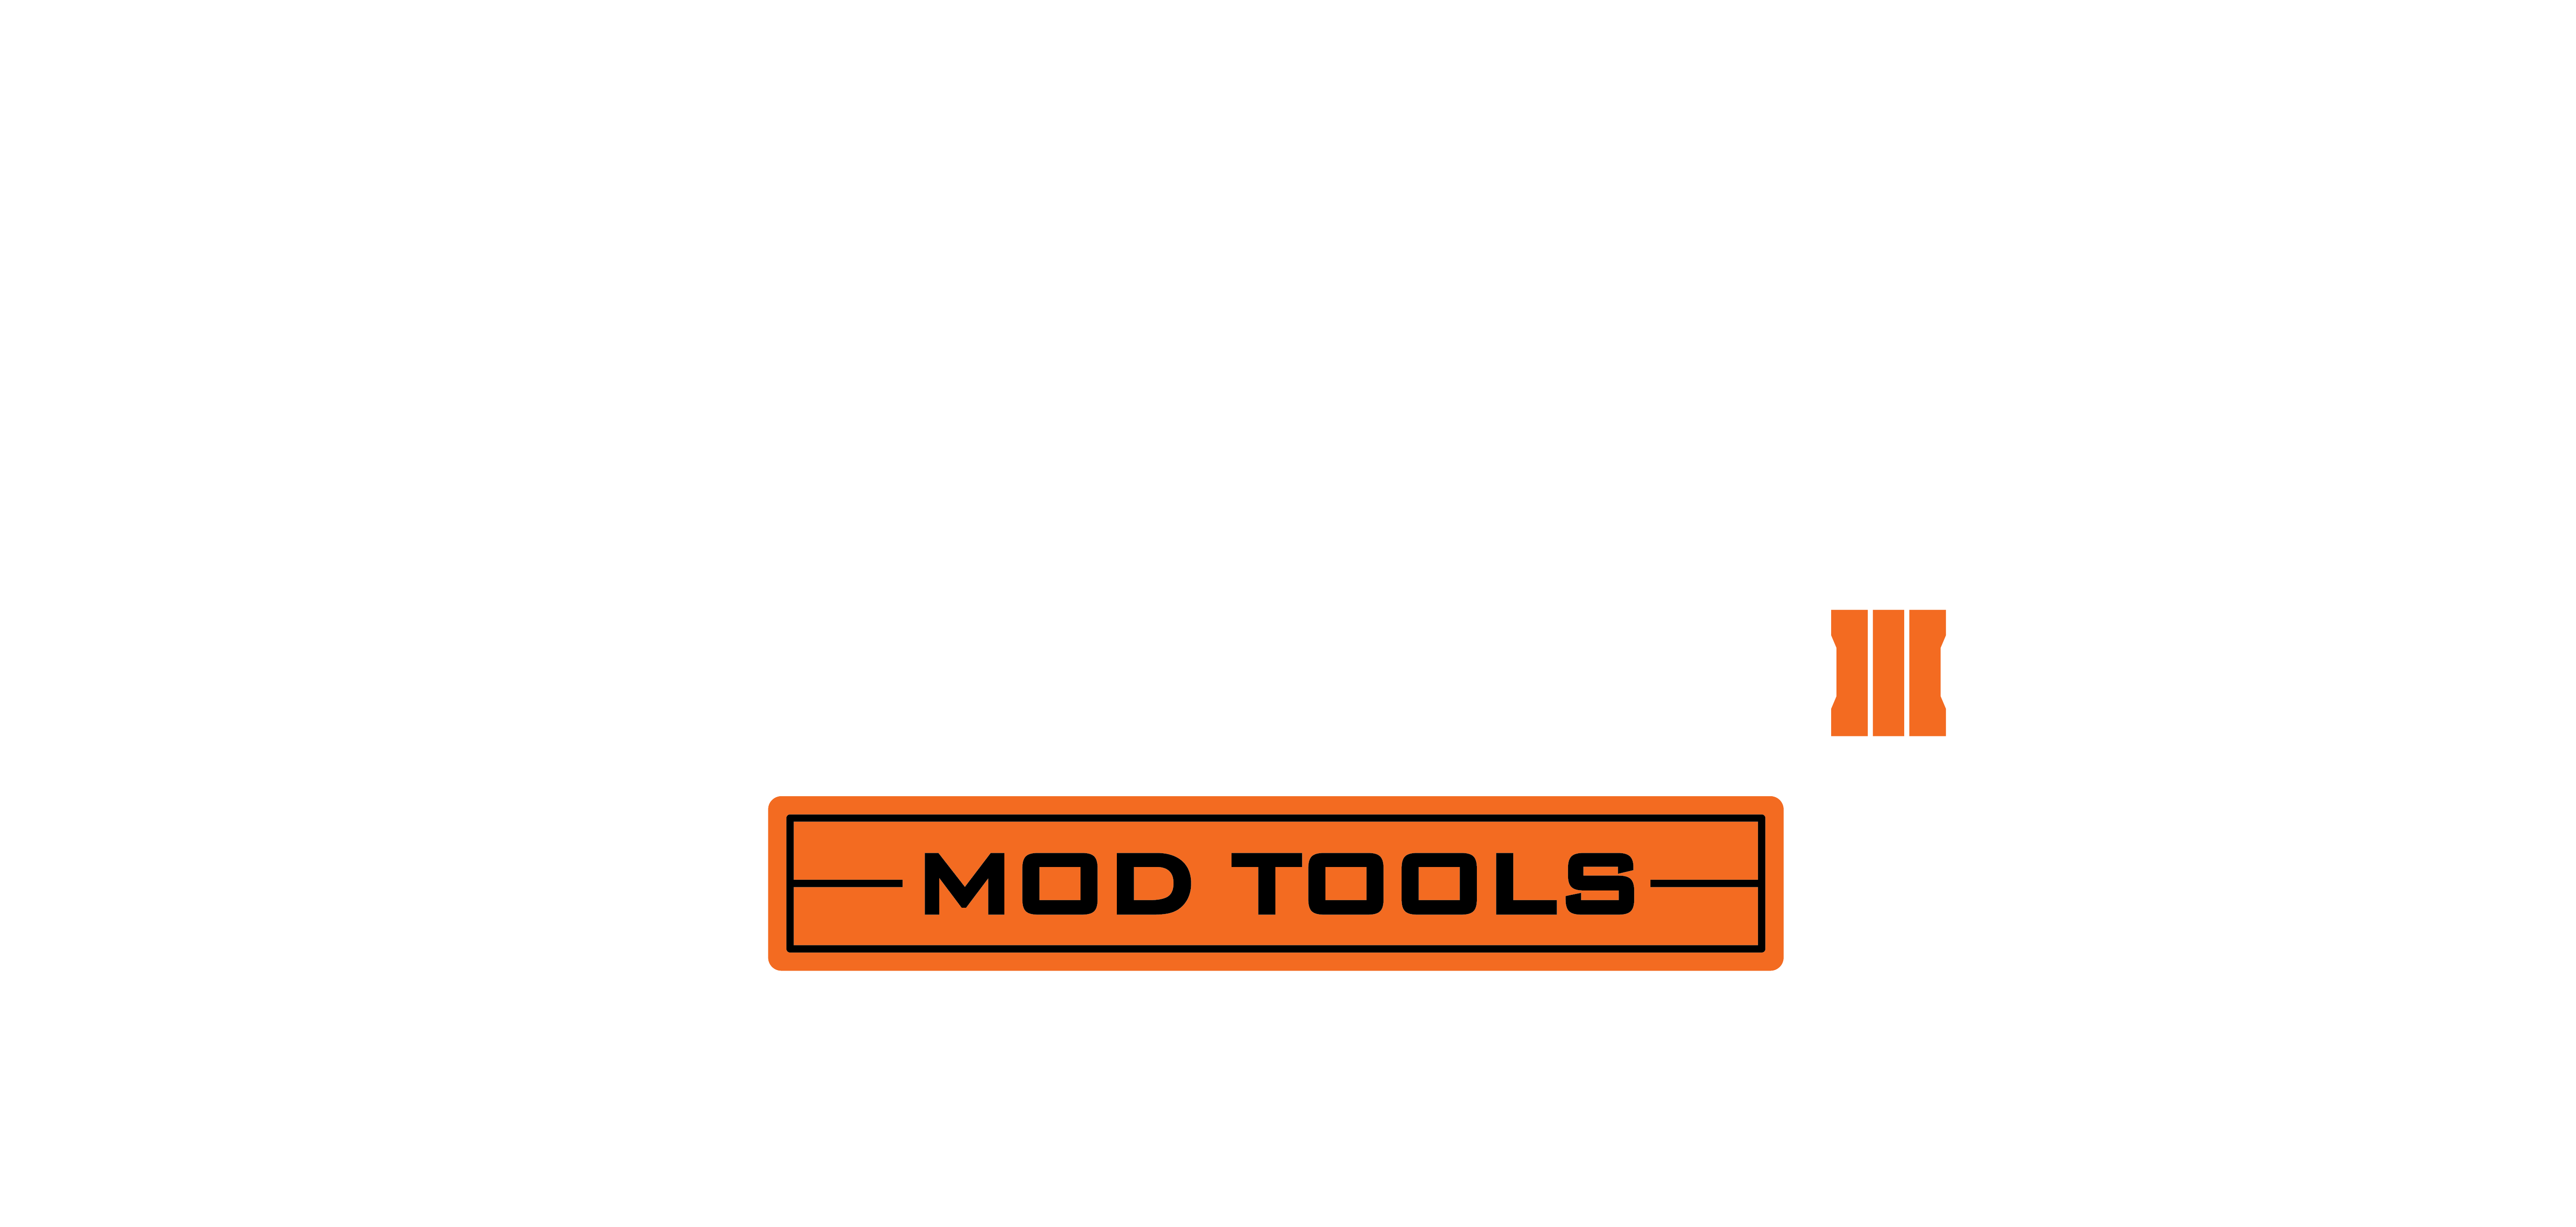 1 16 71. Call of Duty Black ops 3 logo. Cod Black ops 3 Wallpaper Zombie.